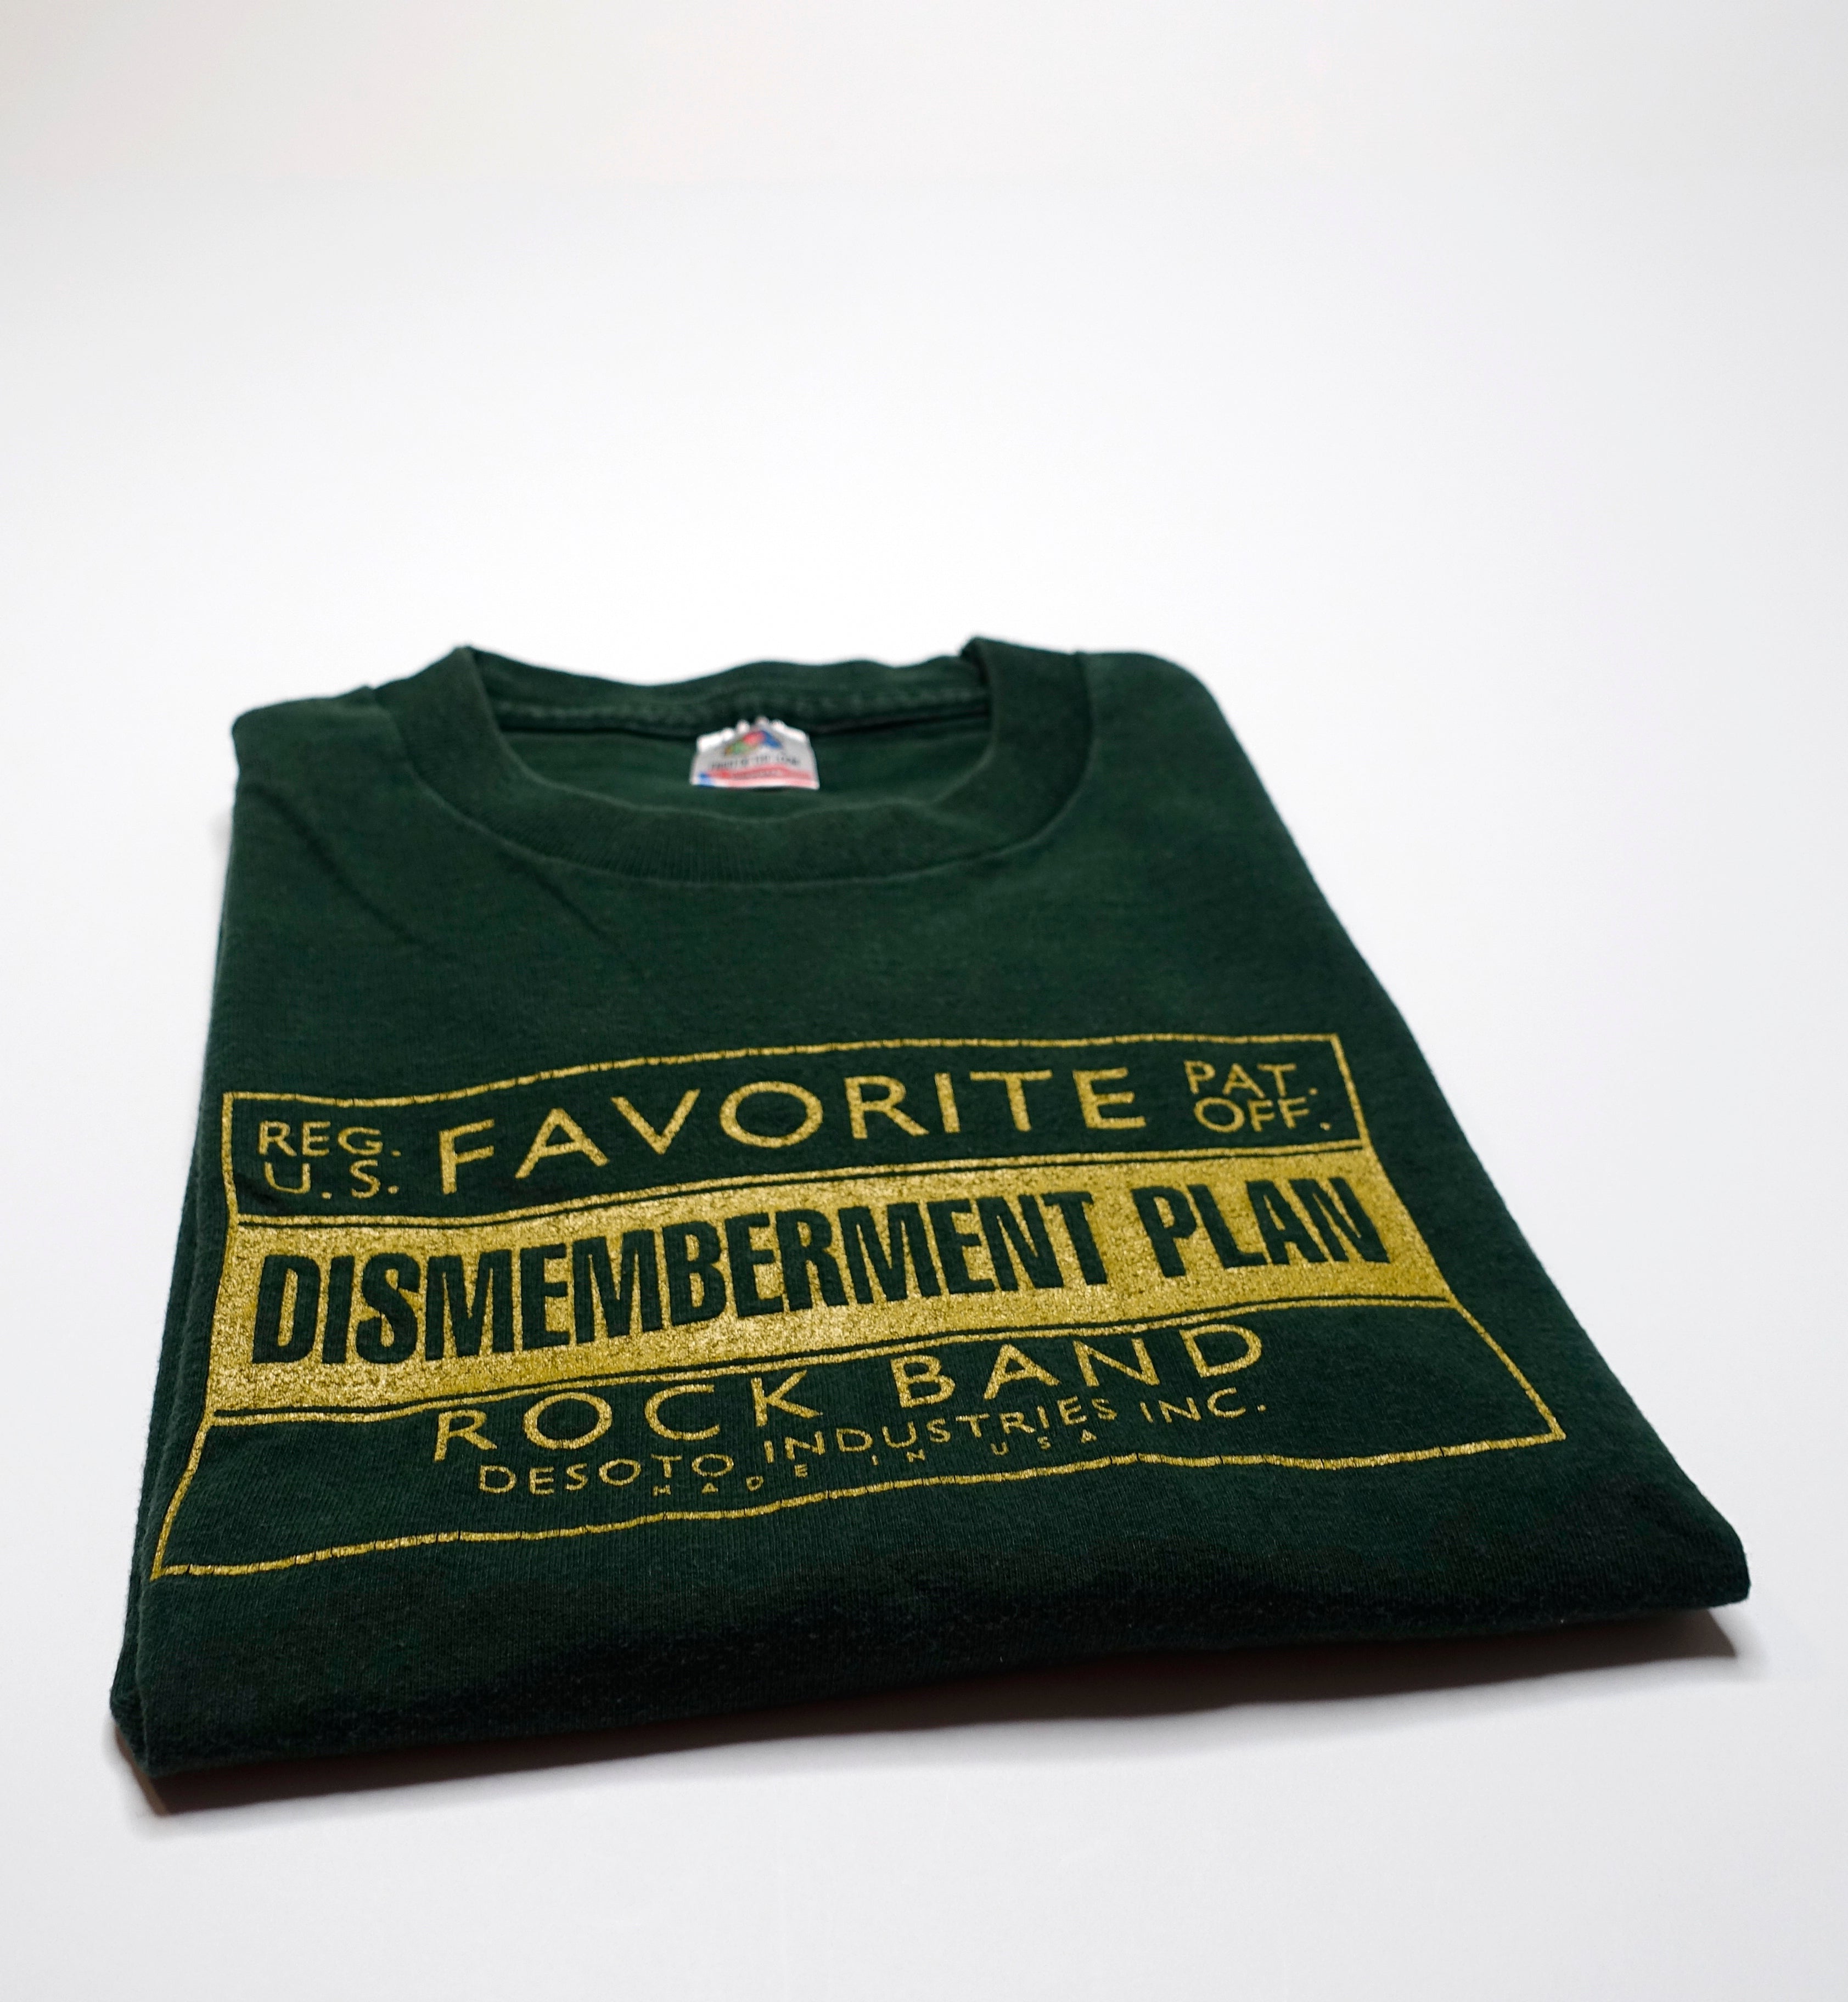 Dismemberment Plan - Favorite Rock Band 90's Shirt Size Large